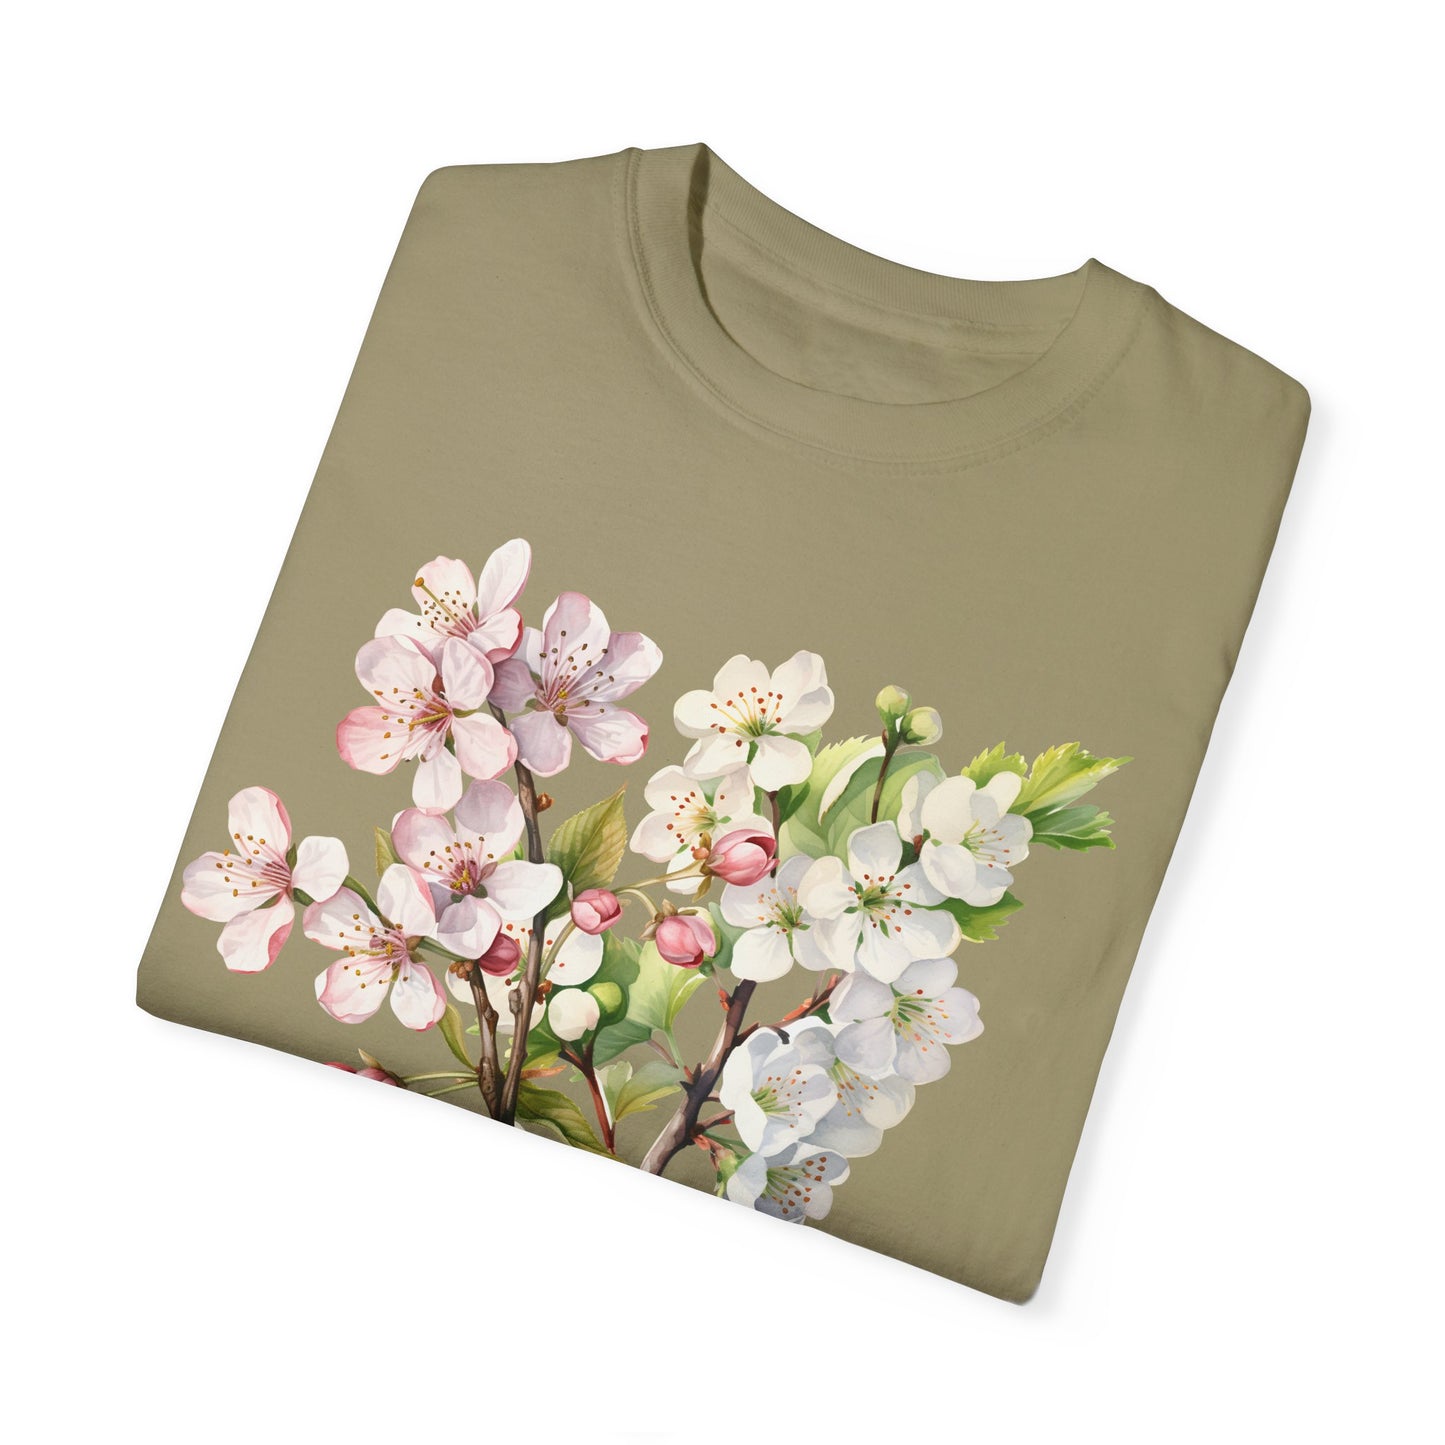 May Birth Flower "Hawthorn" - Unisex Garment-Dyed T-shirt